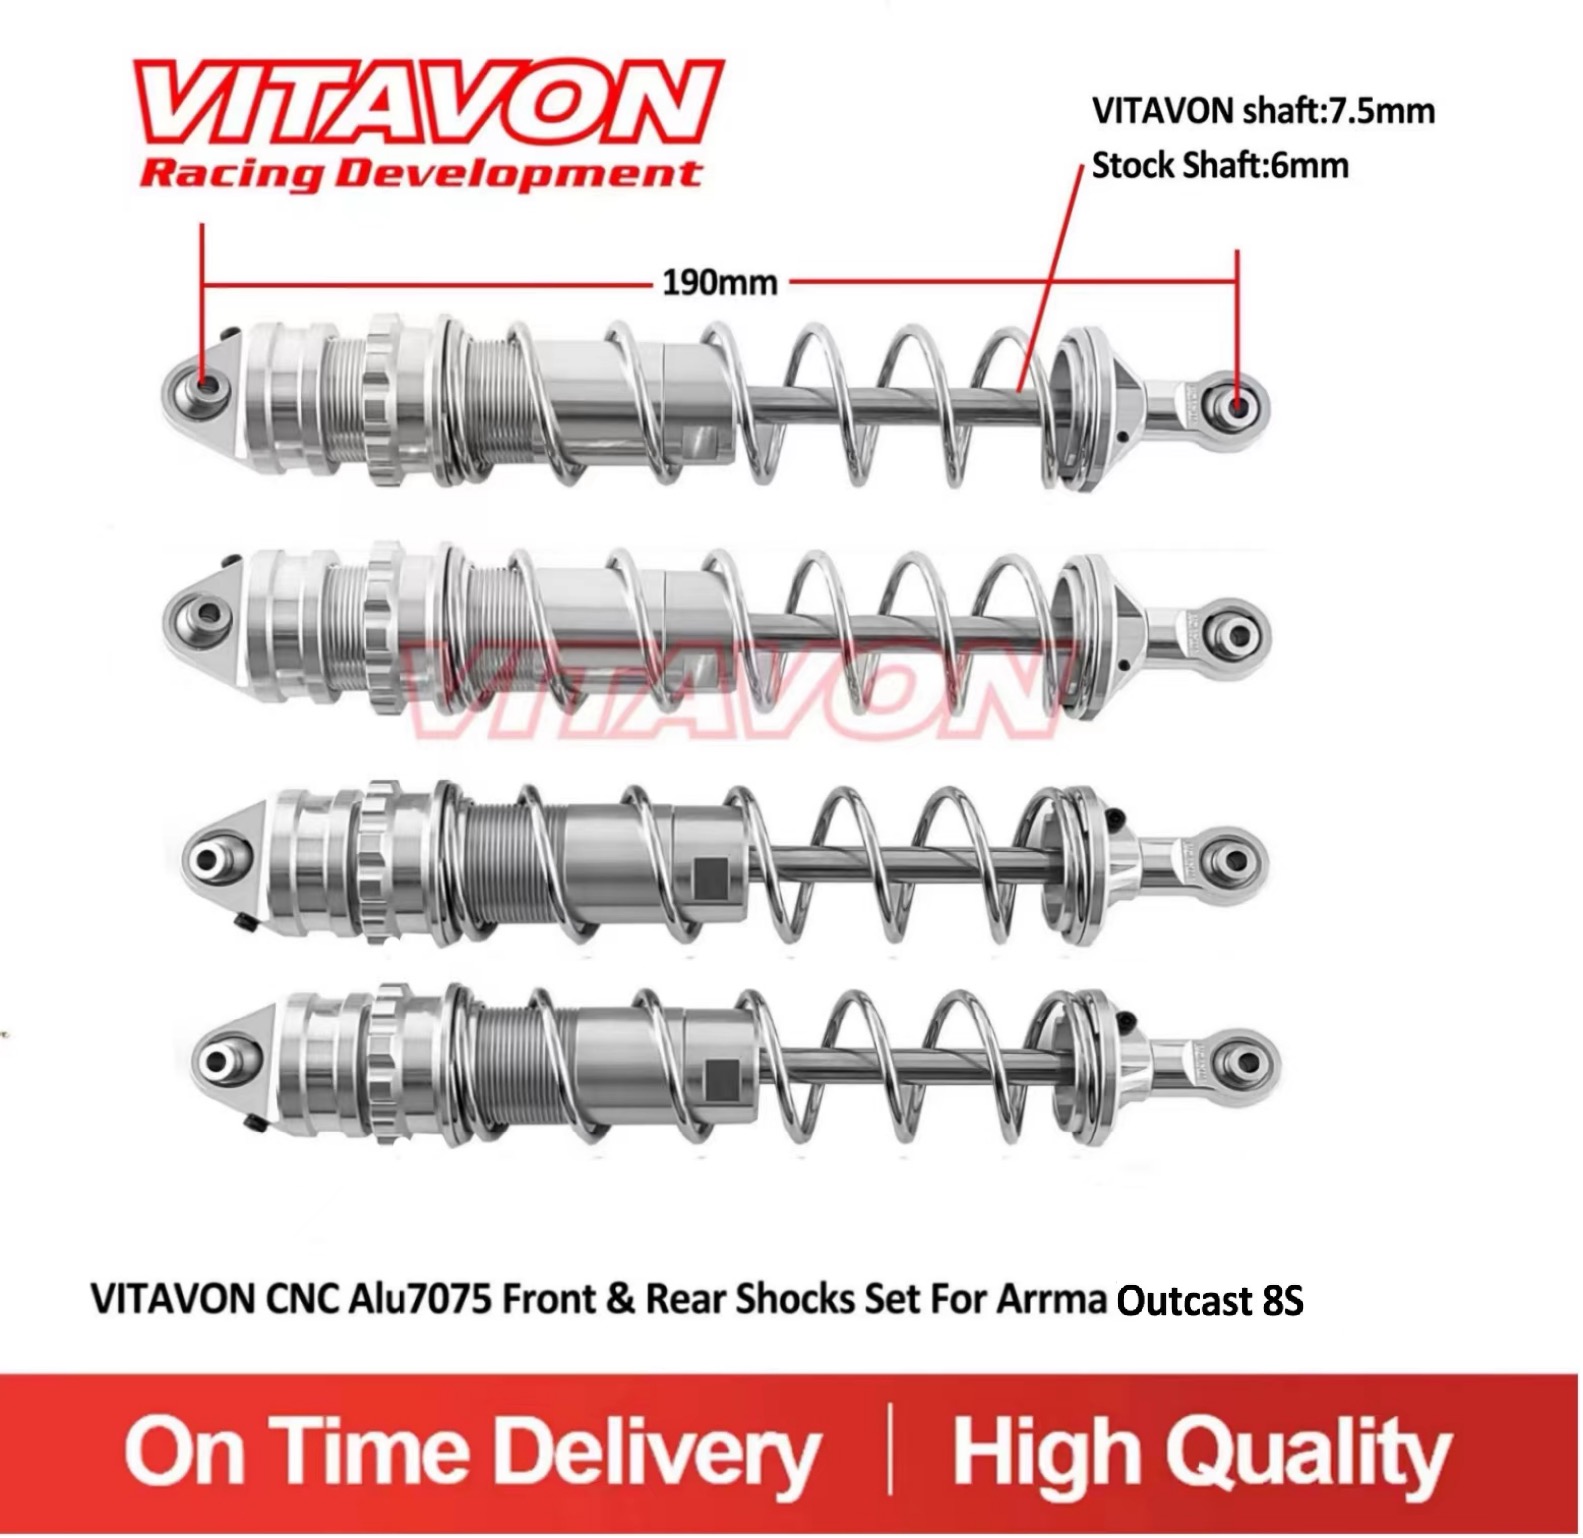 VITAVON CNC Alu7075 Front & Rear Shocks Set For Arrma Outcast 8S